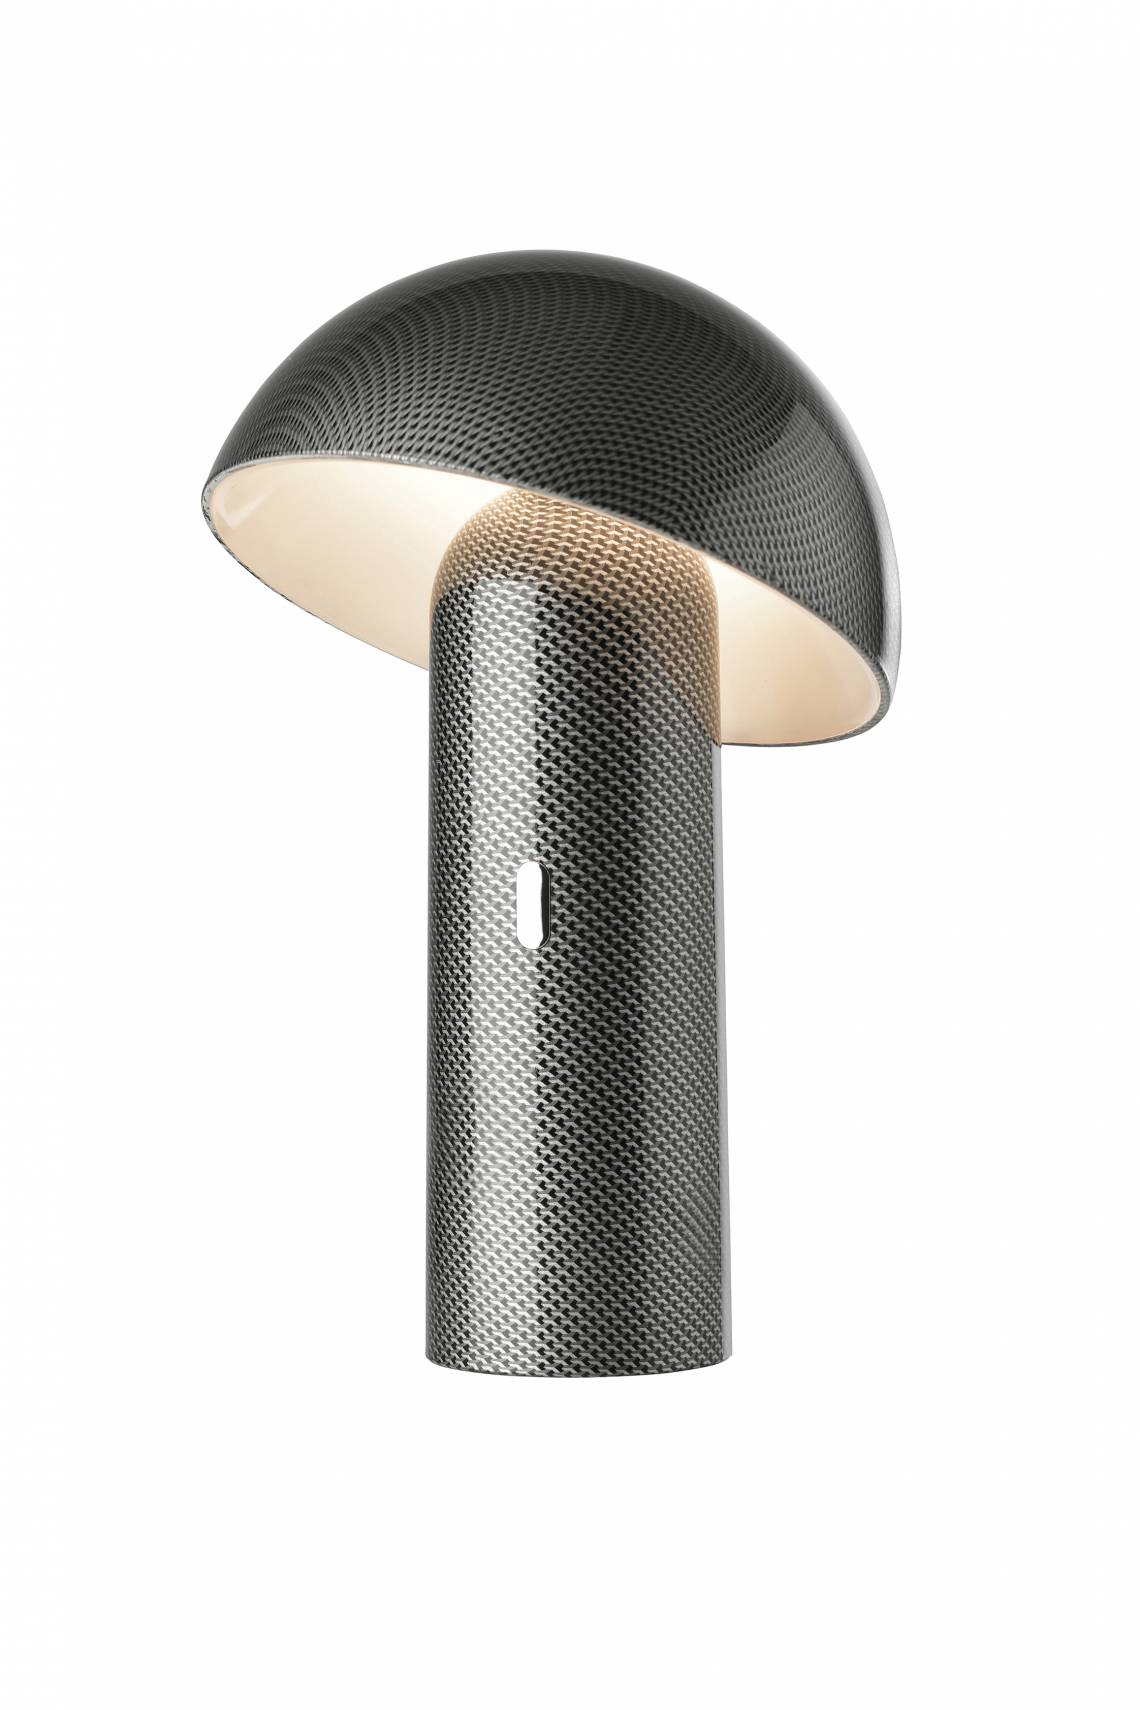 Sompex Svamp T LED-Leuchte - carbon